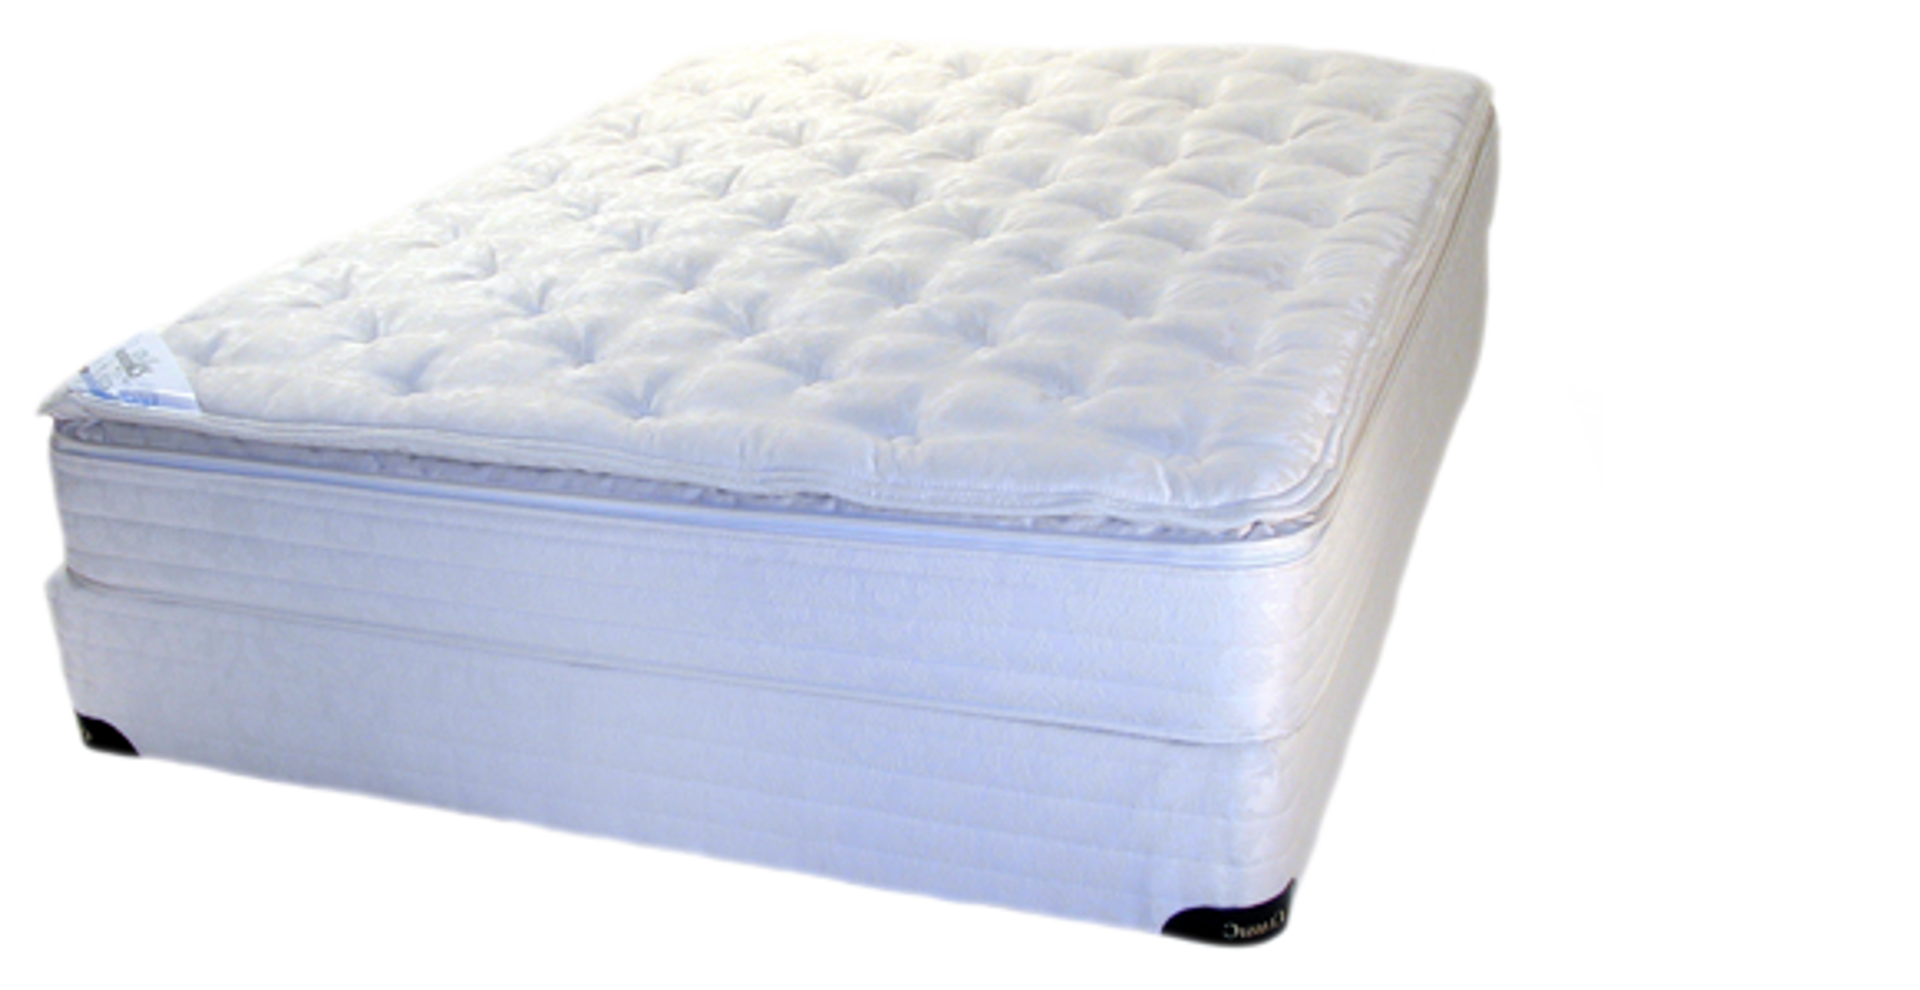 was a queen waterbed mattress